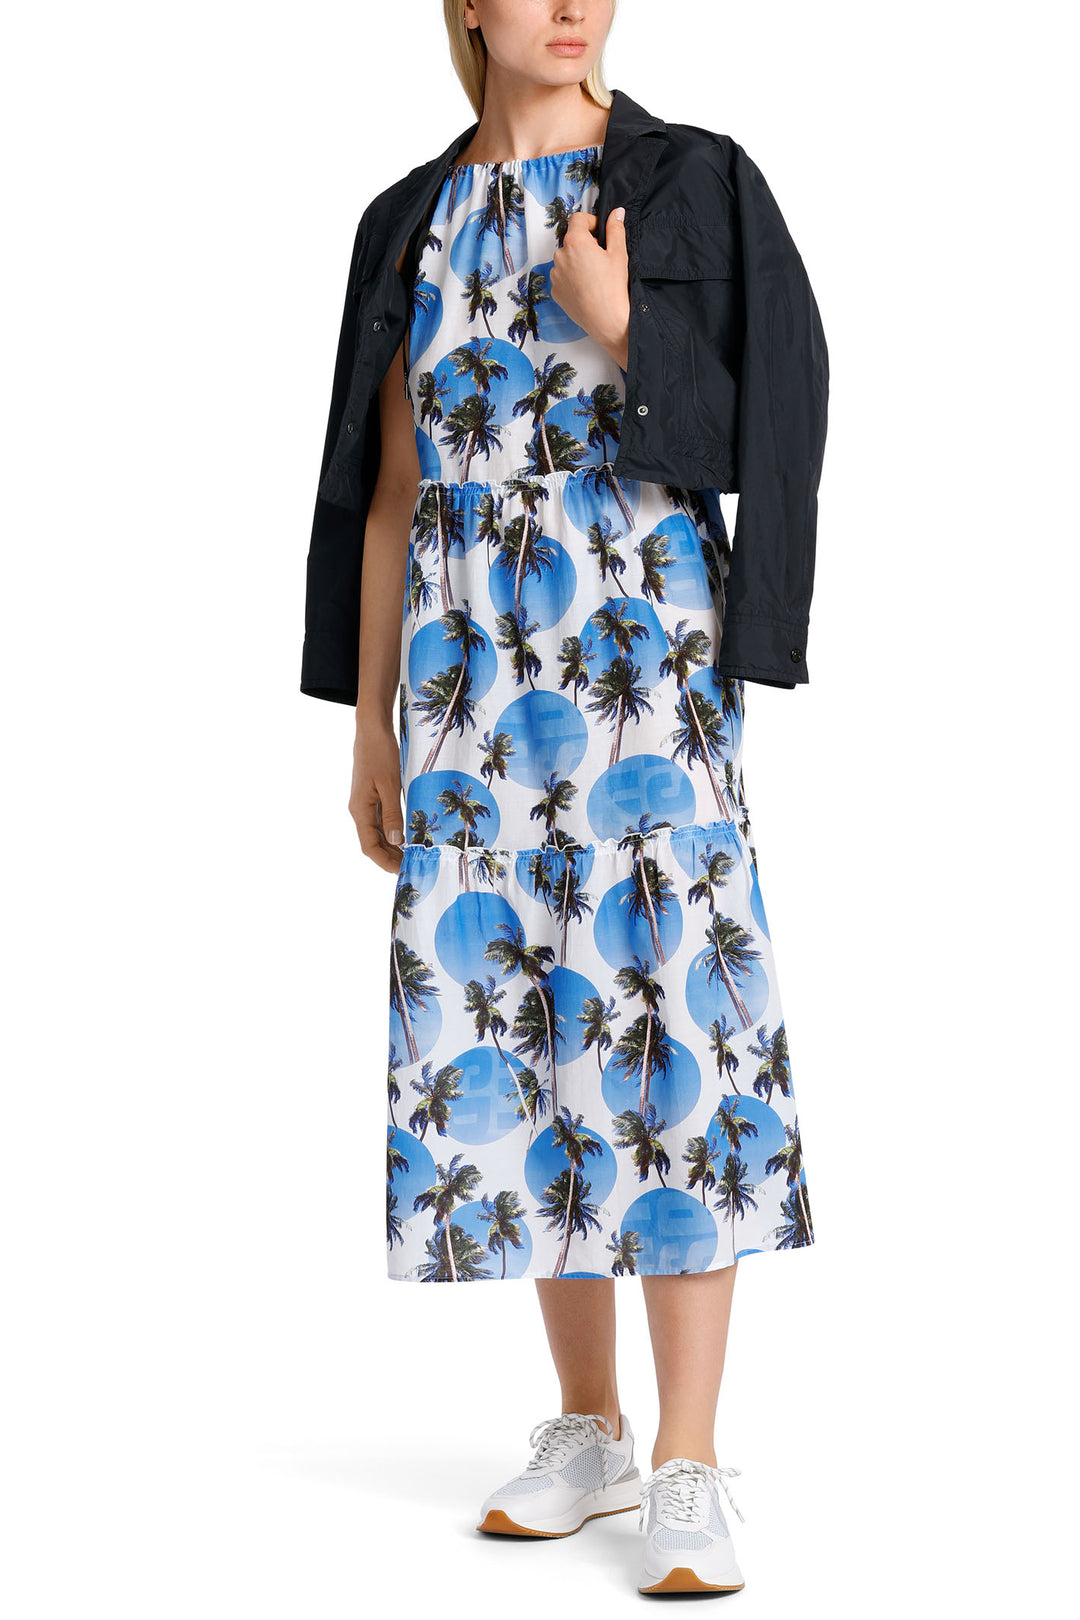 Marc Cain Sports WS 21.43 W44 363 Bright Azure Blue Palm Strap Dress - Olivia Grace Fashion